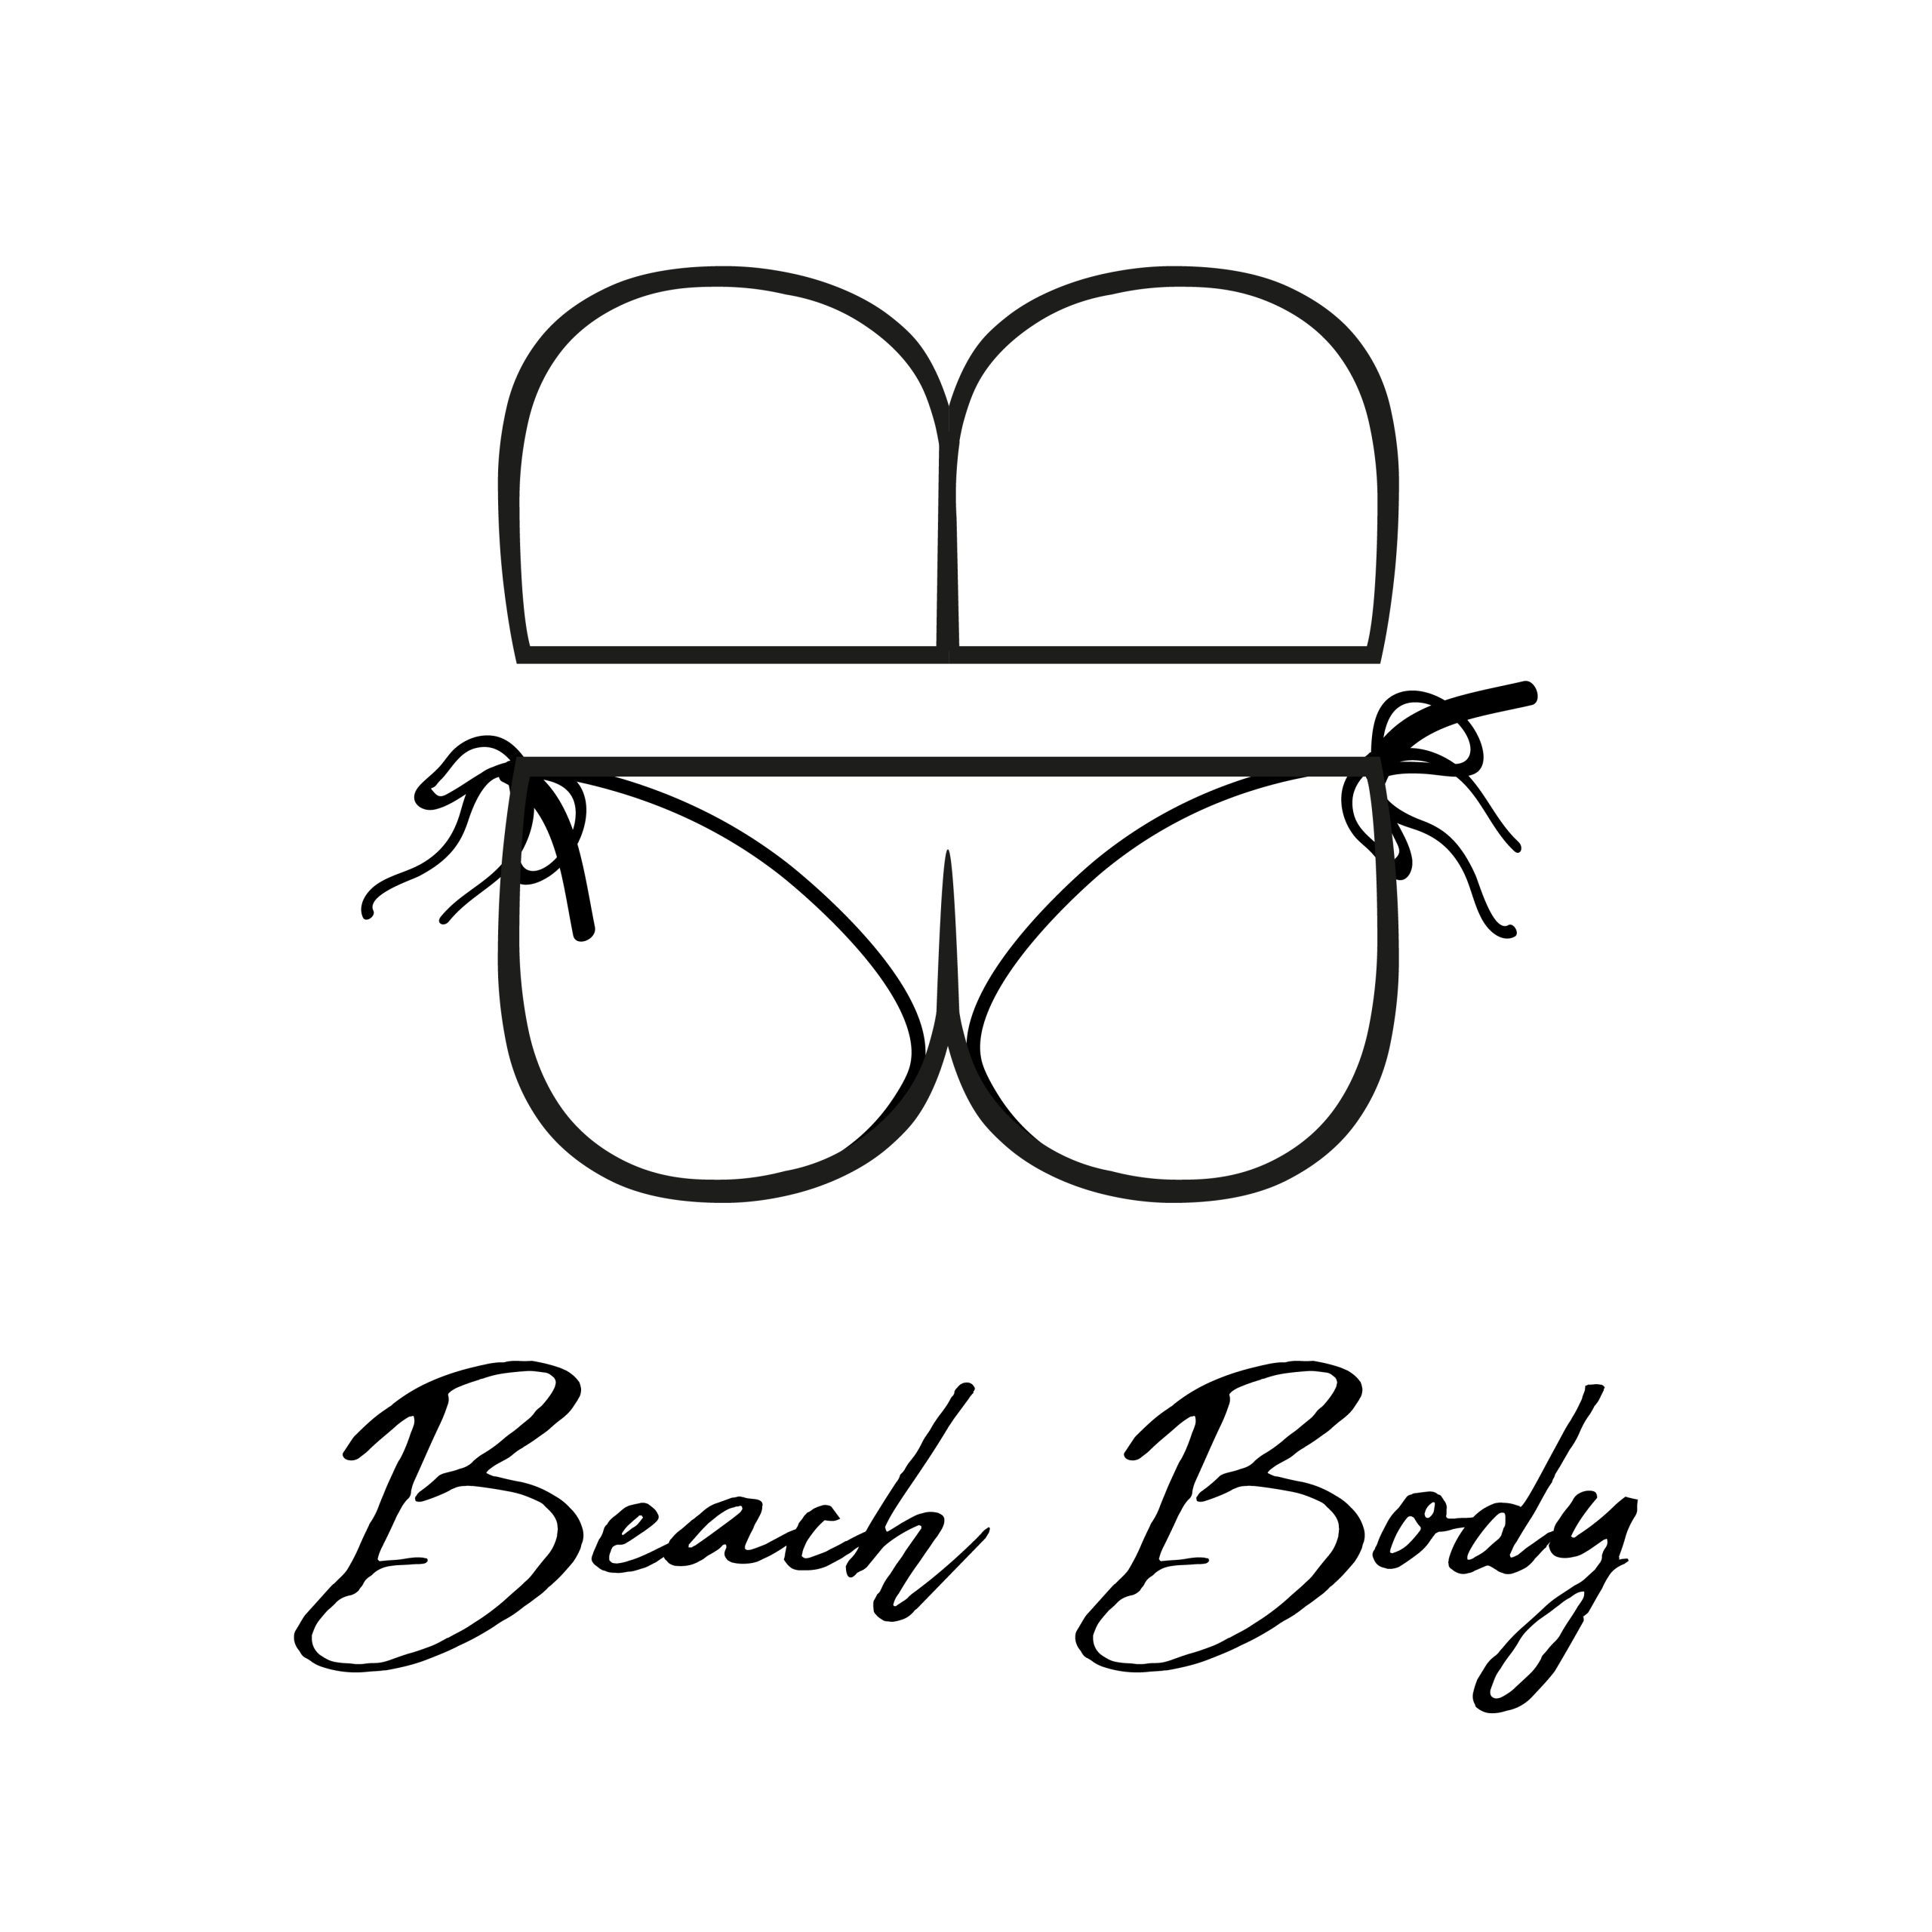 Beach Body - logo 1000x1000